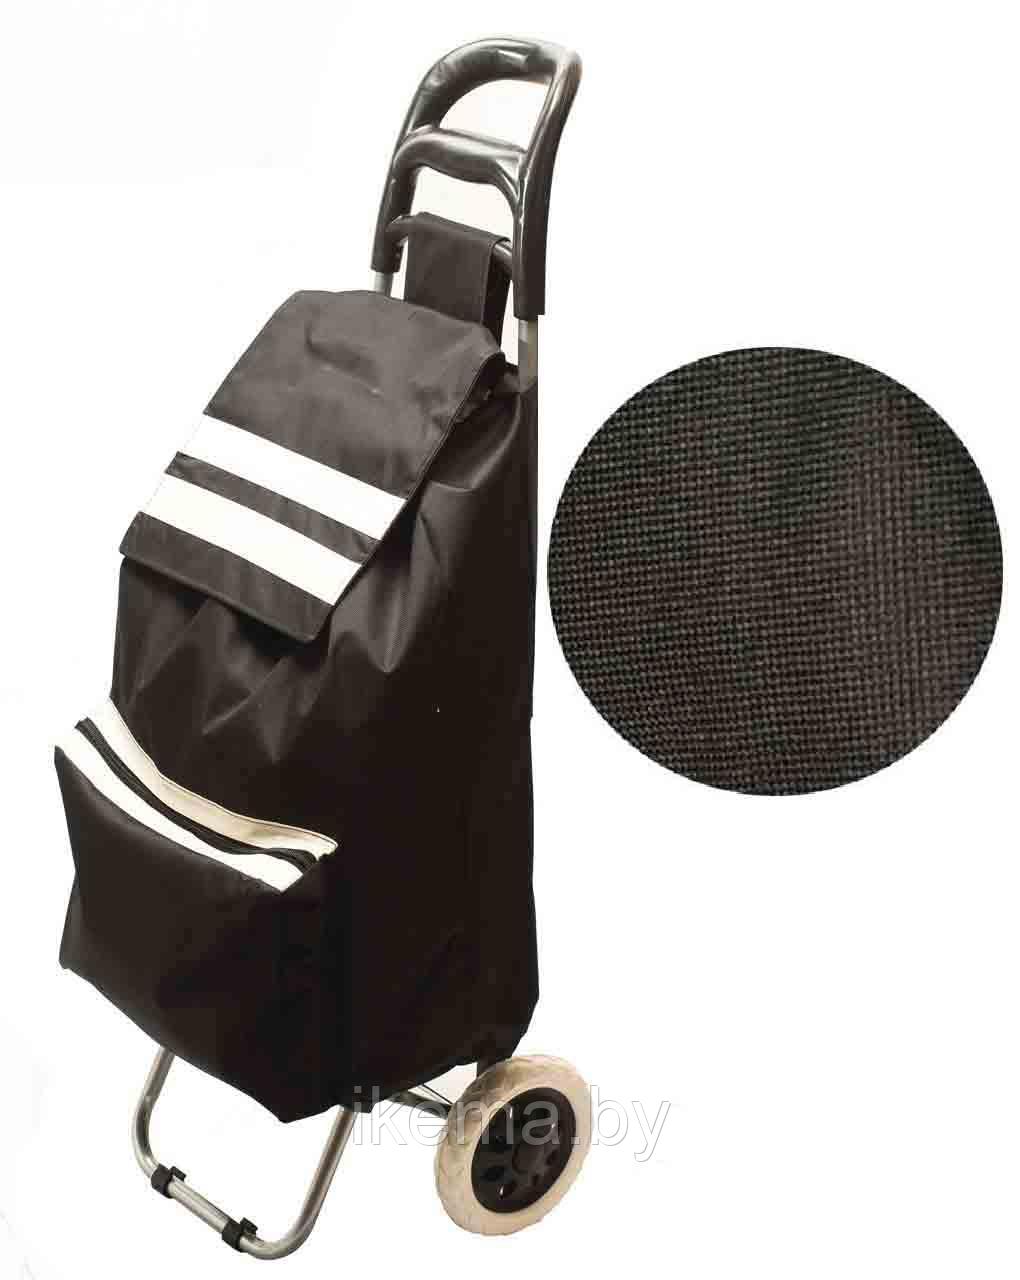 Хозяйственная сумка-тележка (1301-D) цвет №1 черный. Сумка 55*33*20 cм, Каркас 95*33*20 см